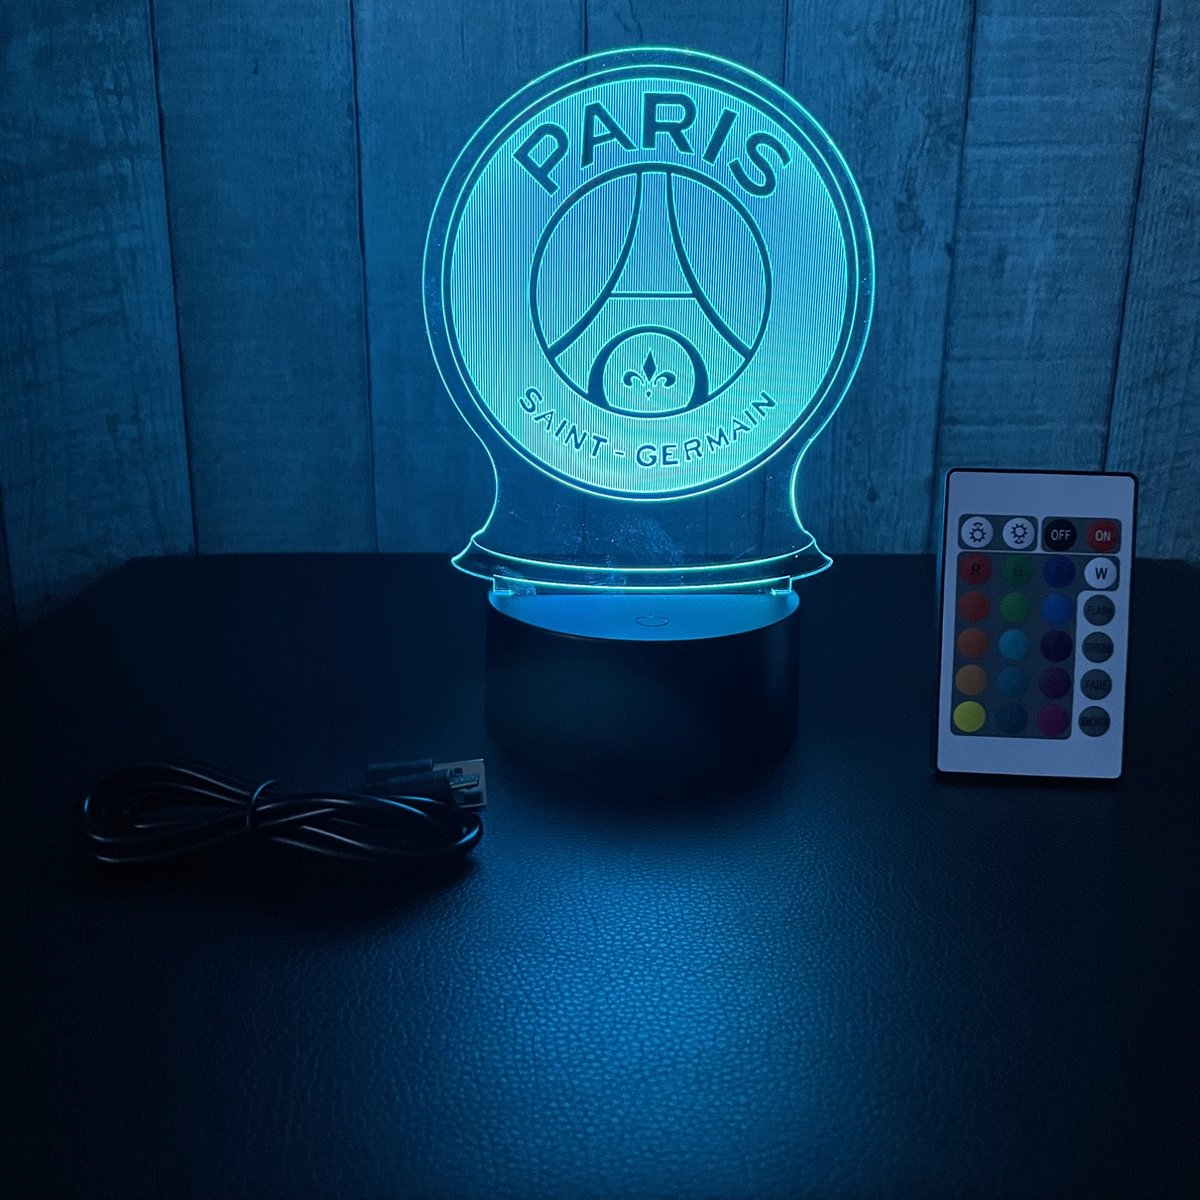 LED veilleuse FC Paris Germain Football Club 3D enfants enfants